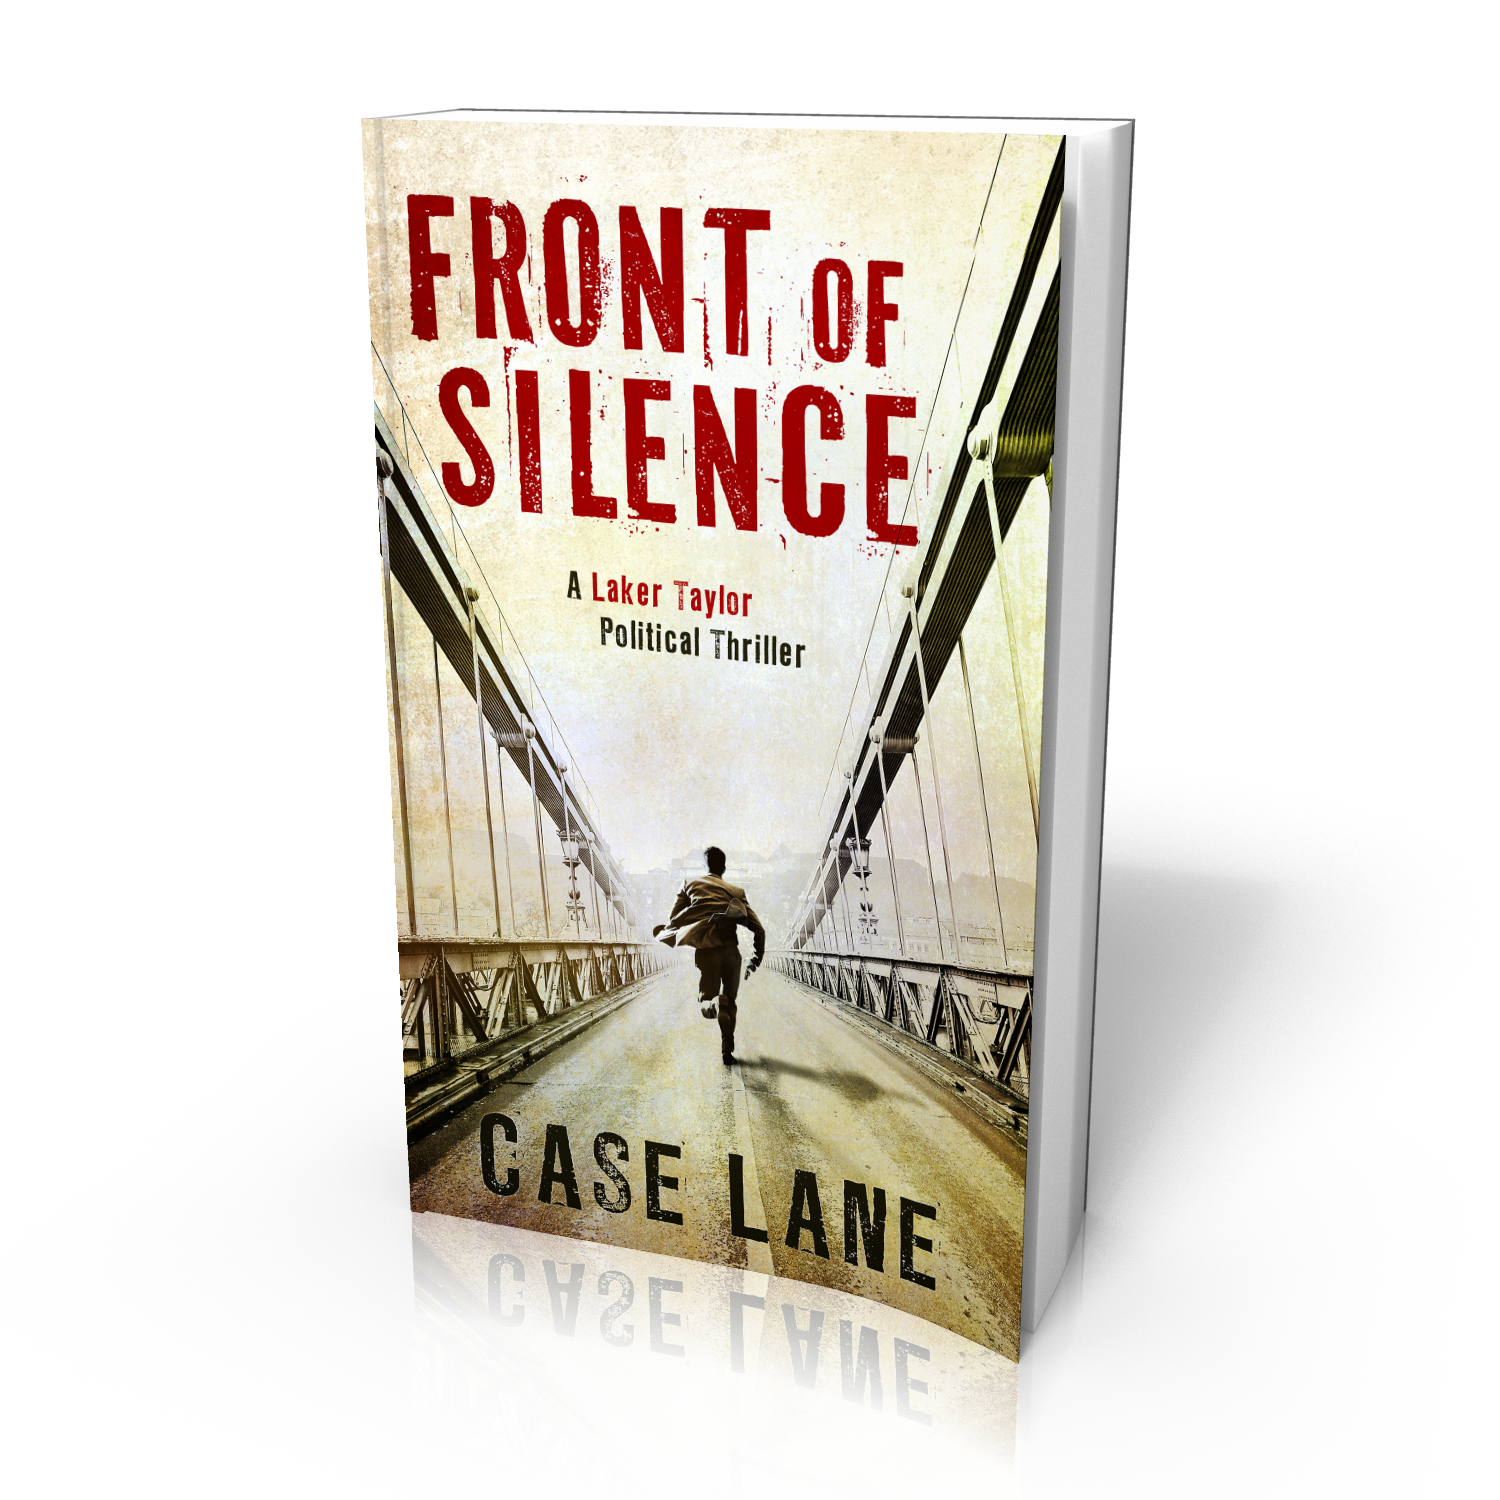 Case Lane’s Political Thriller Book Series